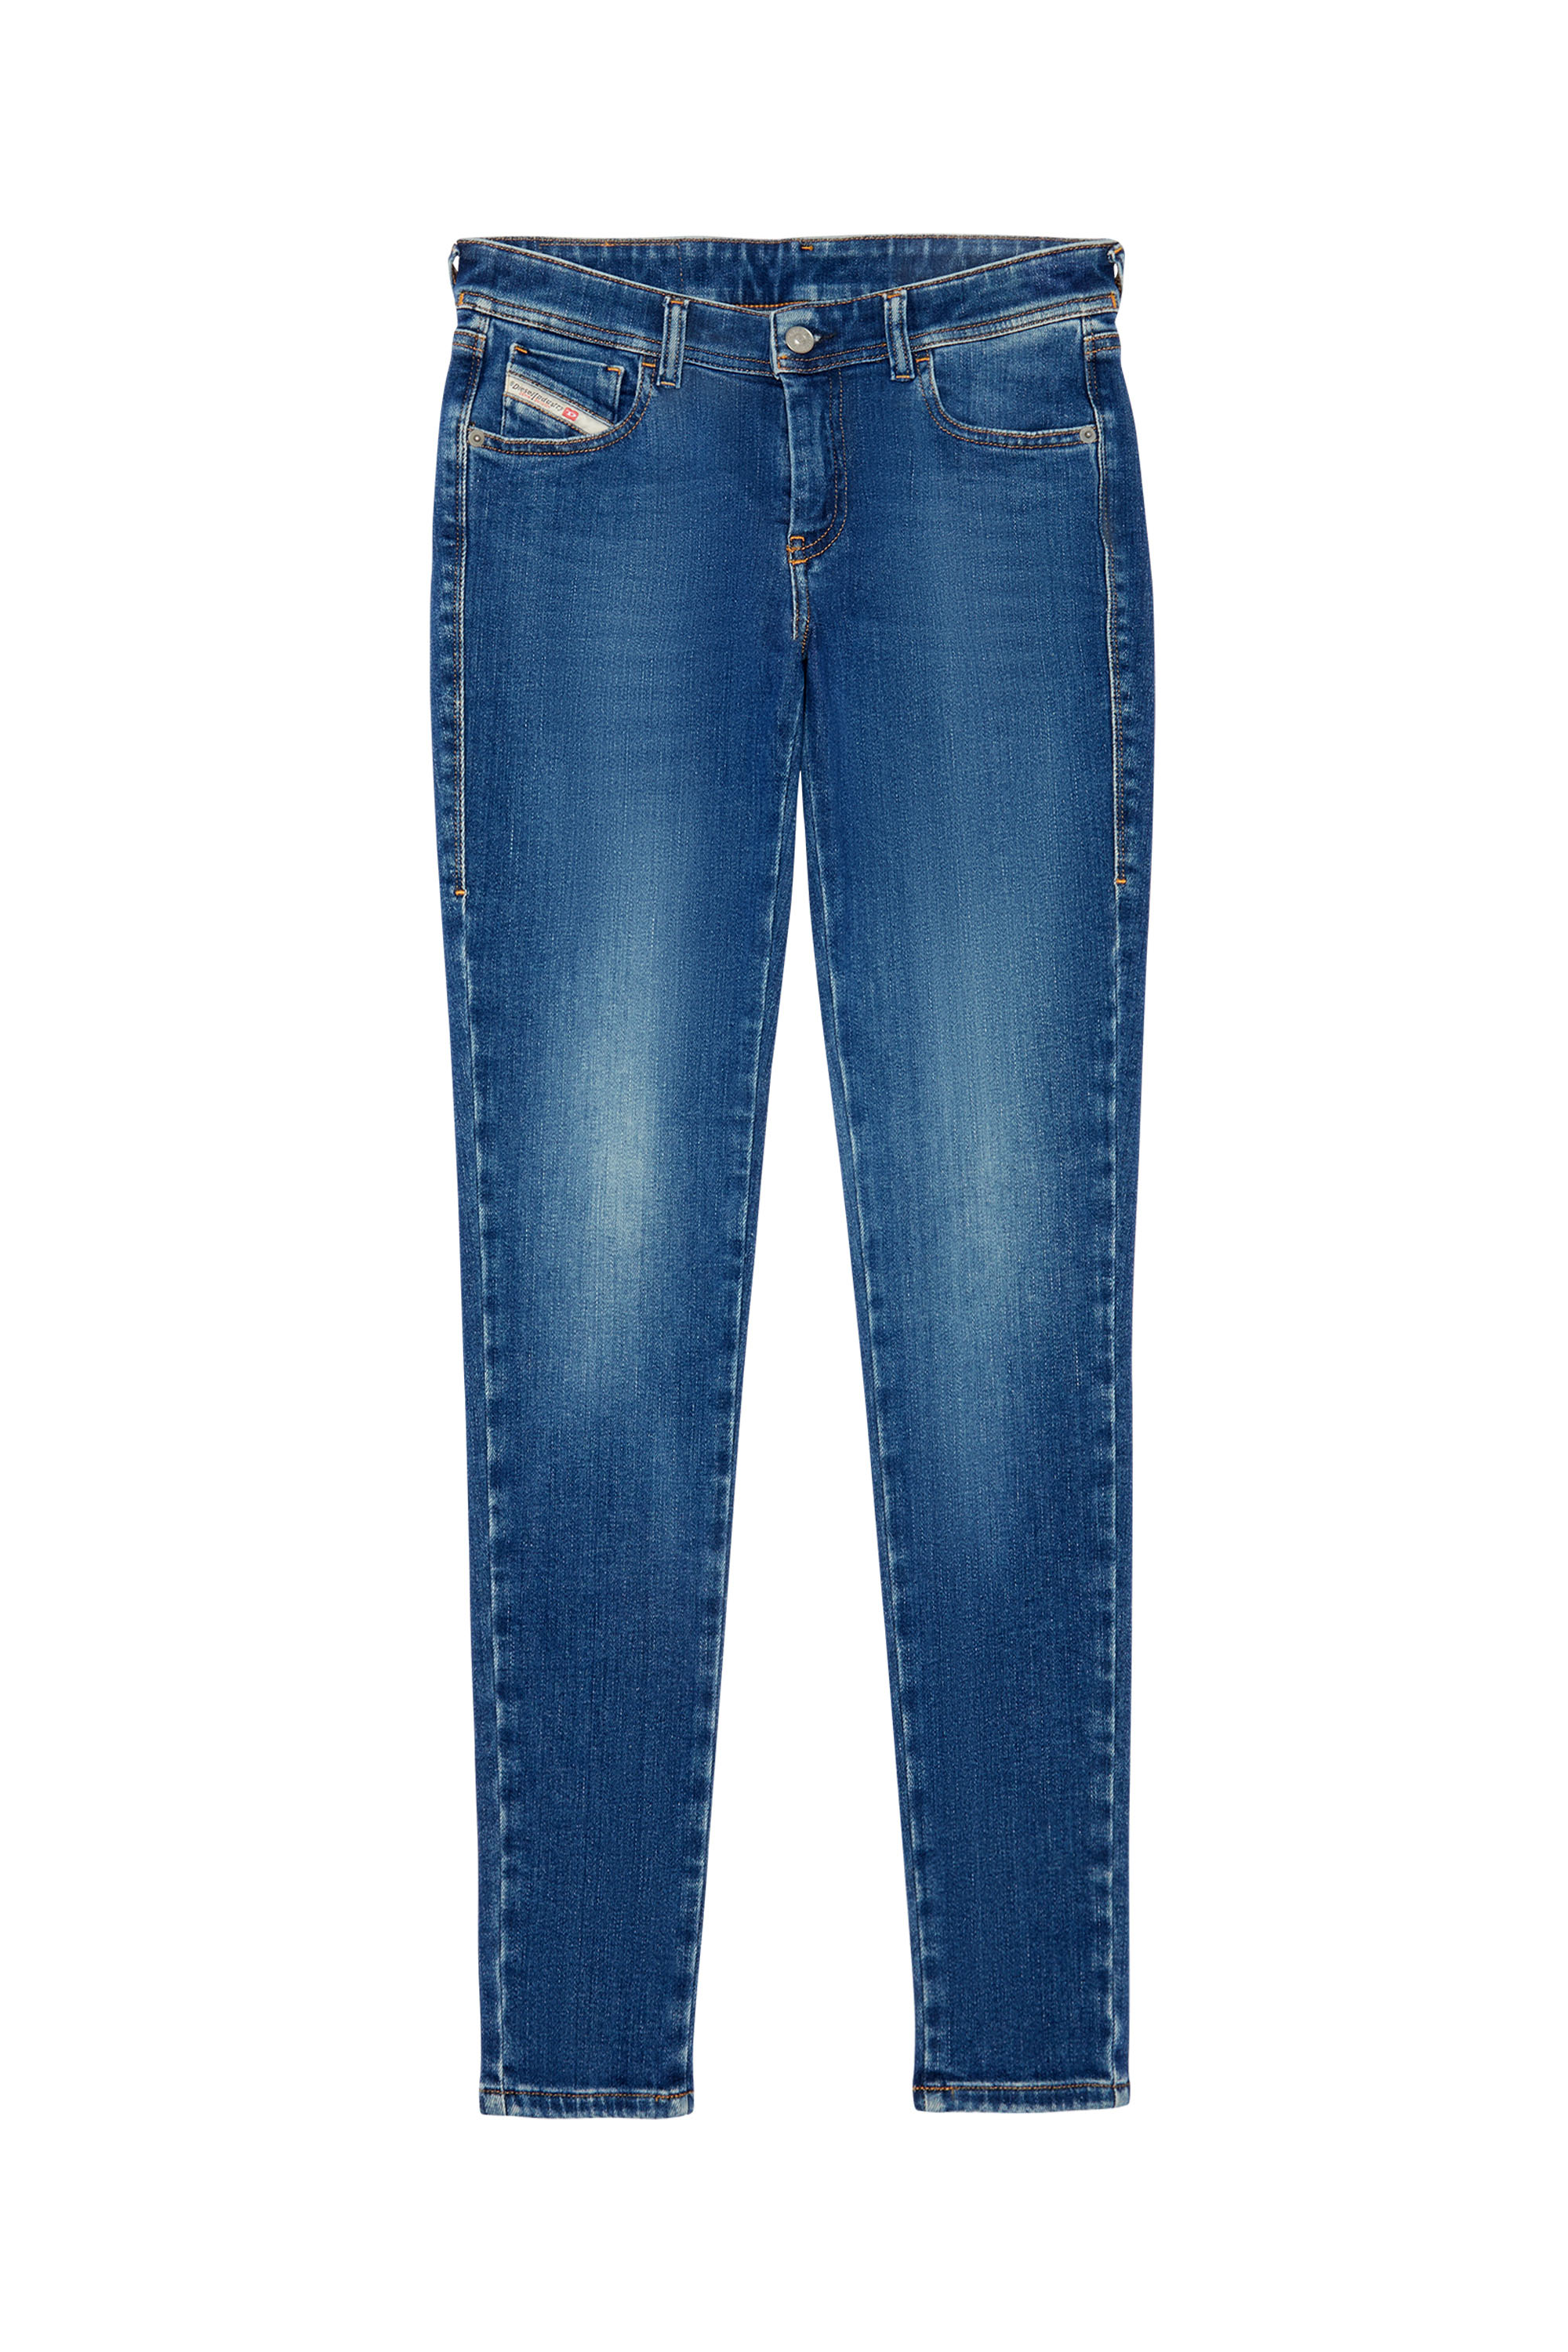 2018 Slandy low 09C21 Super skinny Jeans, Mittelblau - Jeans